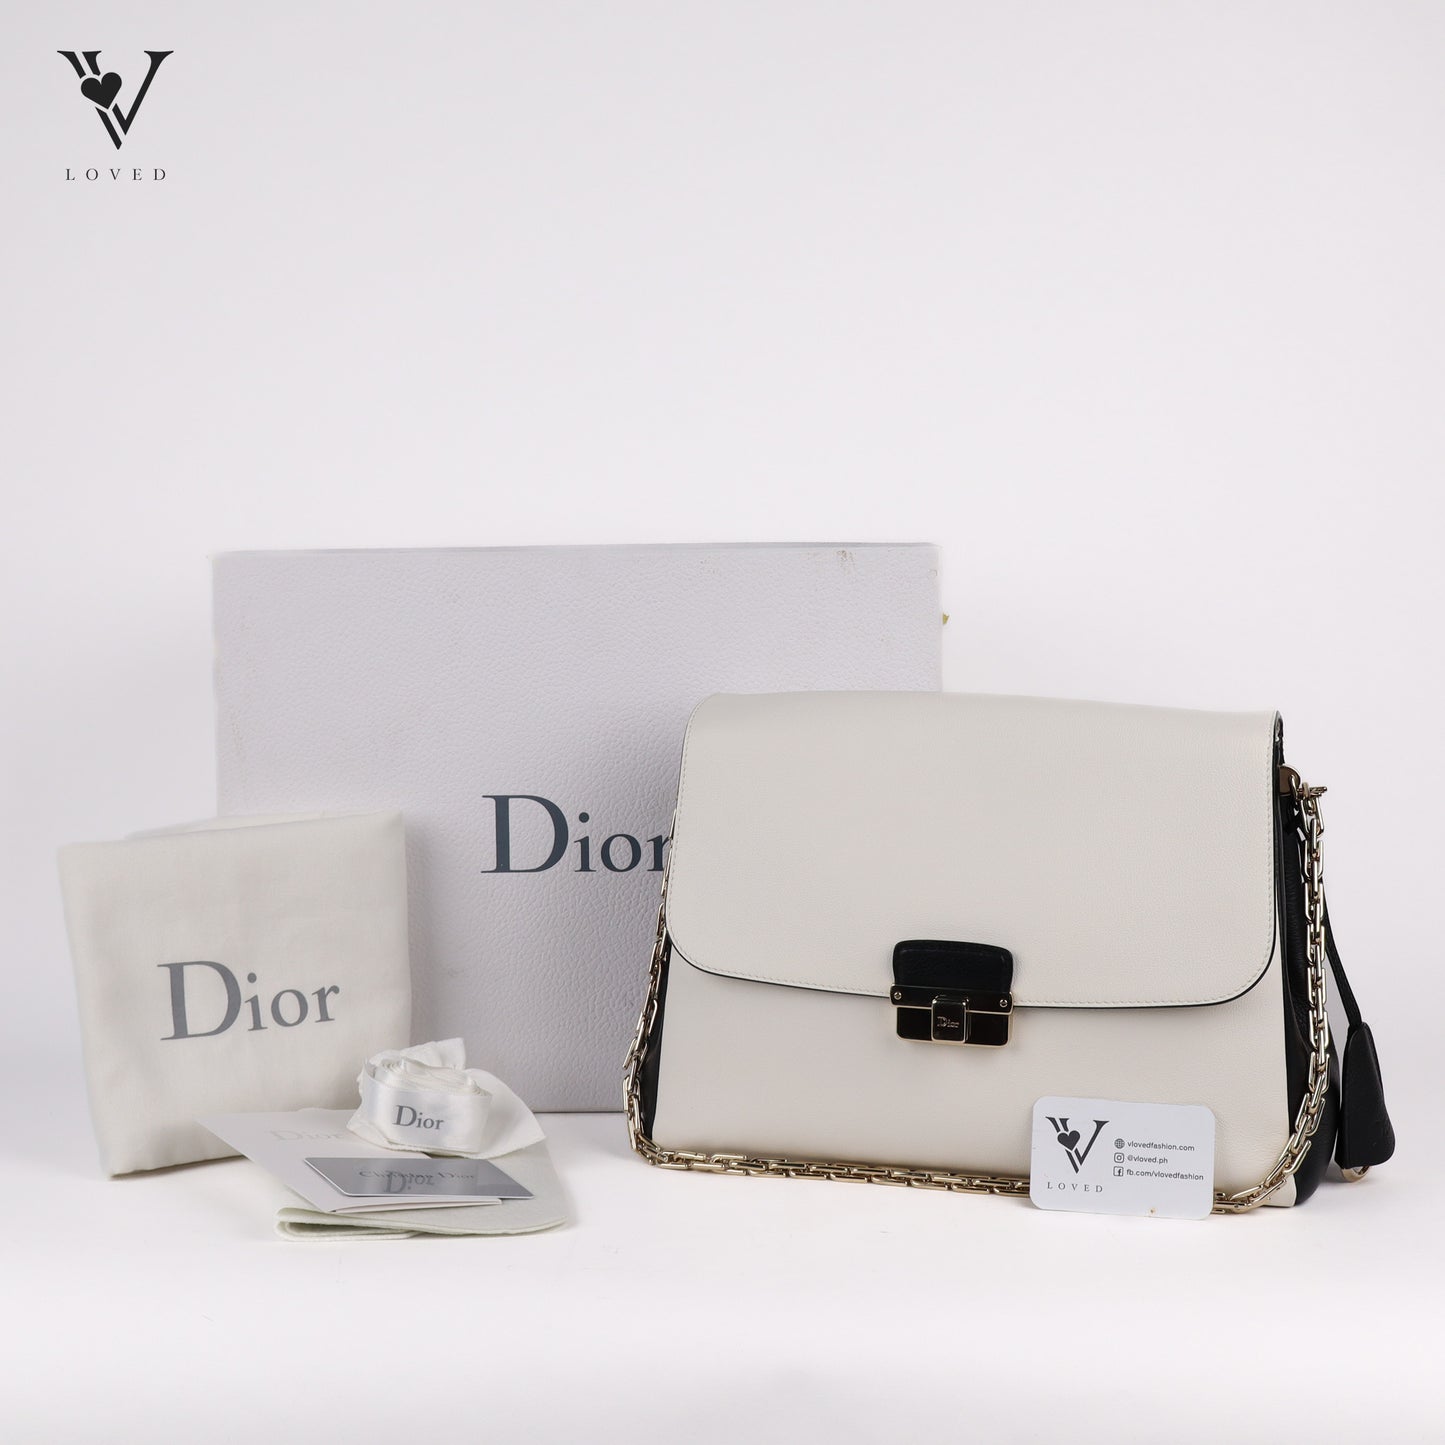 Diorling Shoulder Bag in Off-white and Black Leather